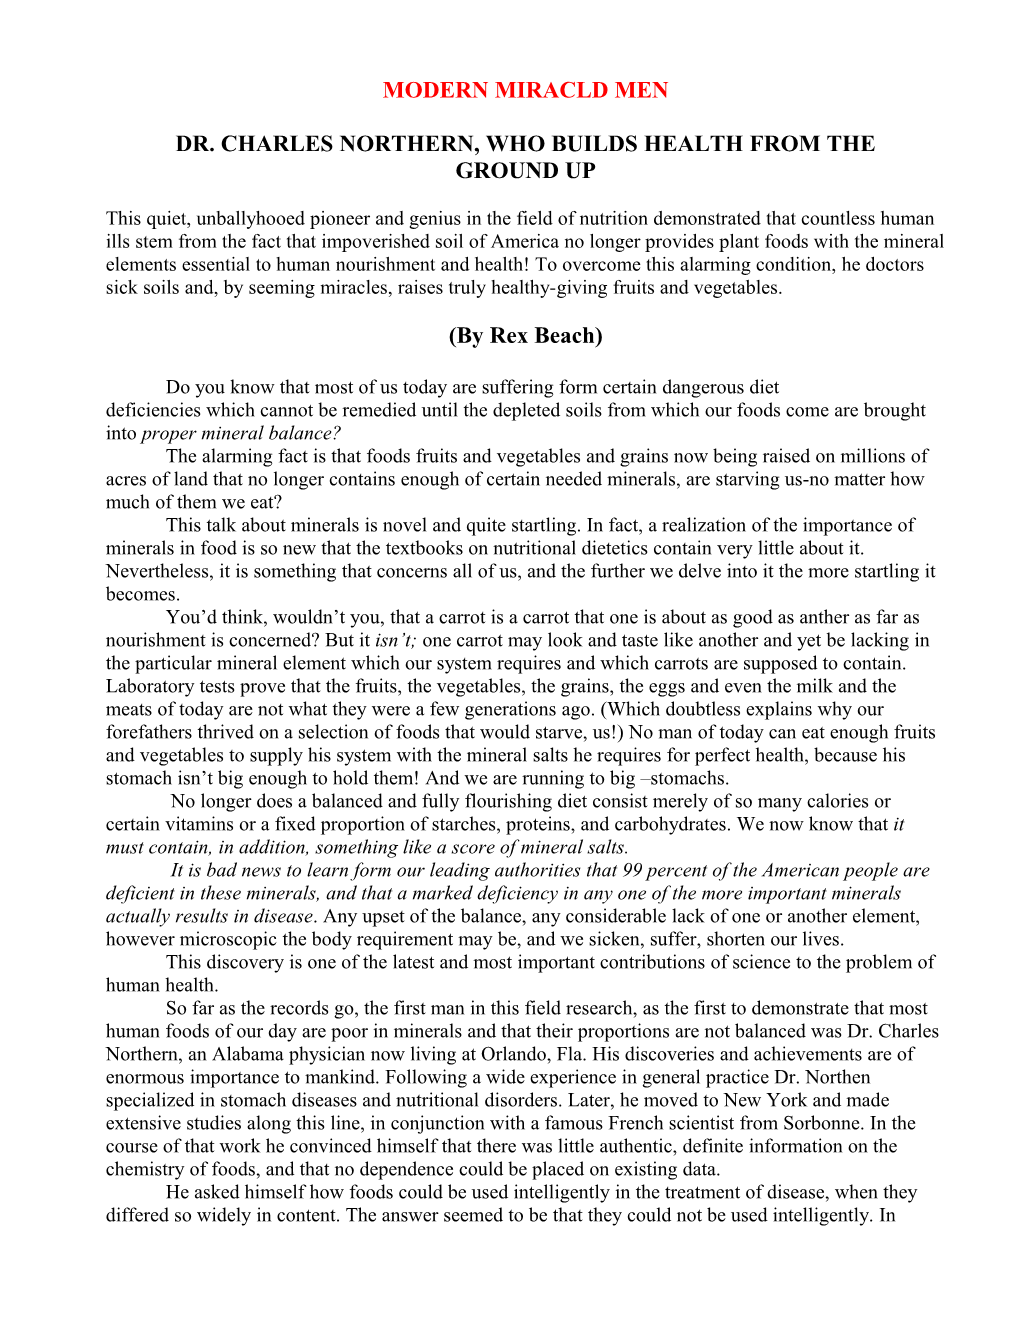 74TH Congress SENATE Document